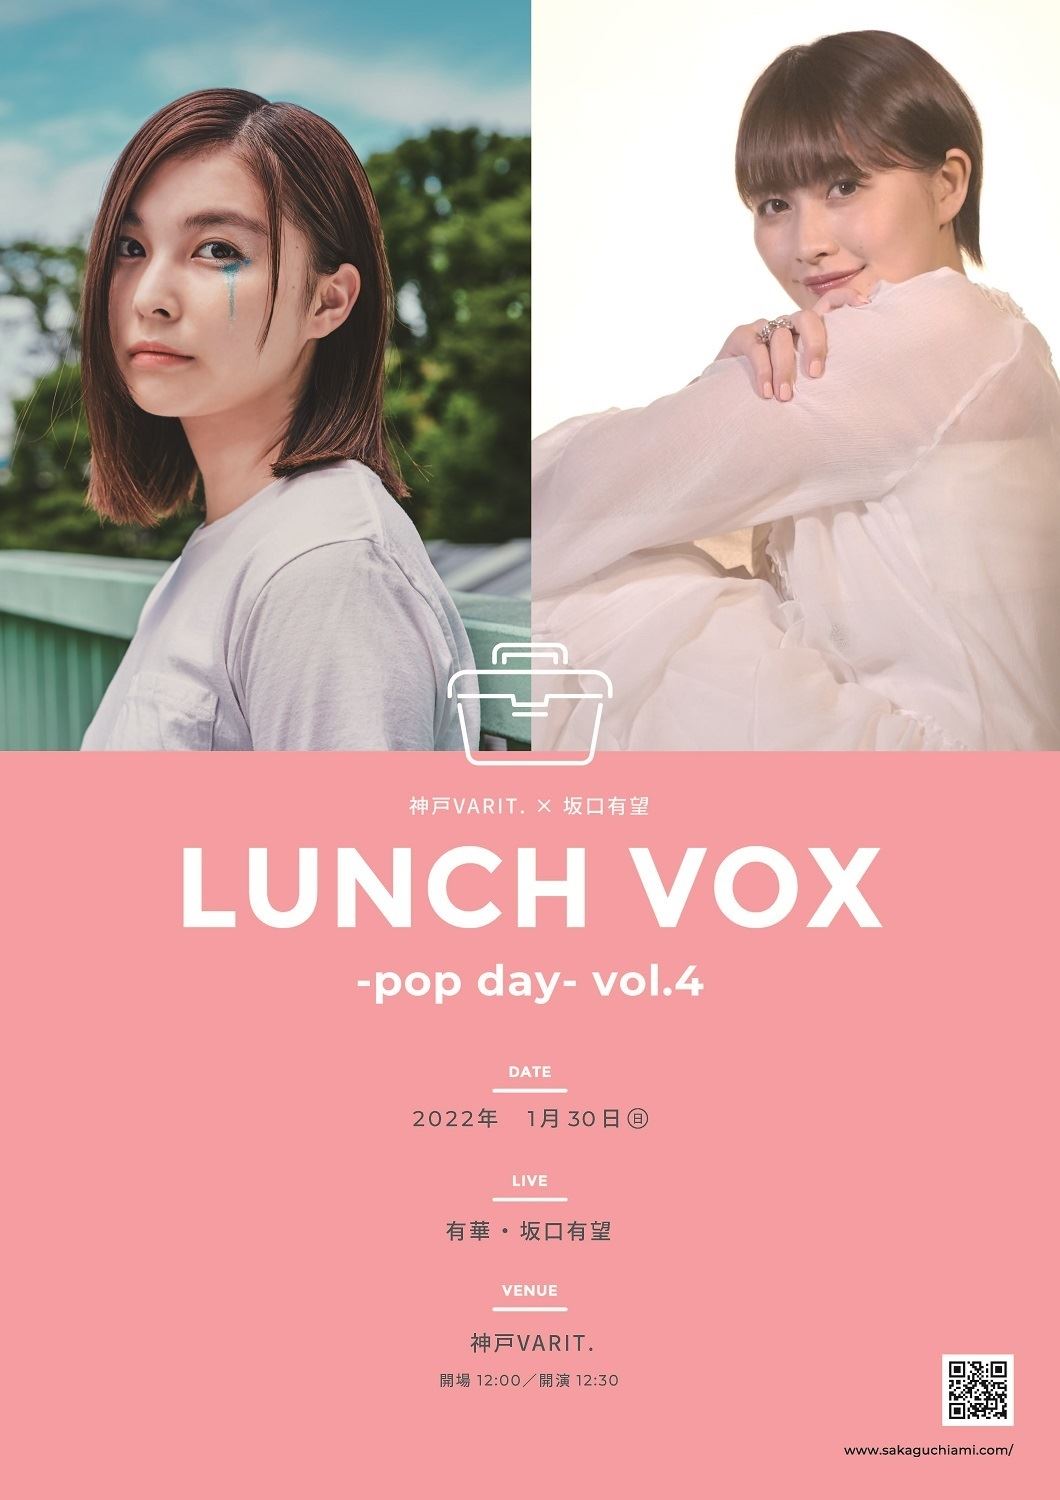 坂口有望『LUNCH VOX -pop day- vol.4』告知画像